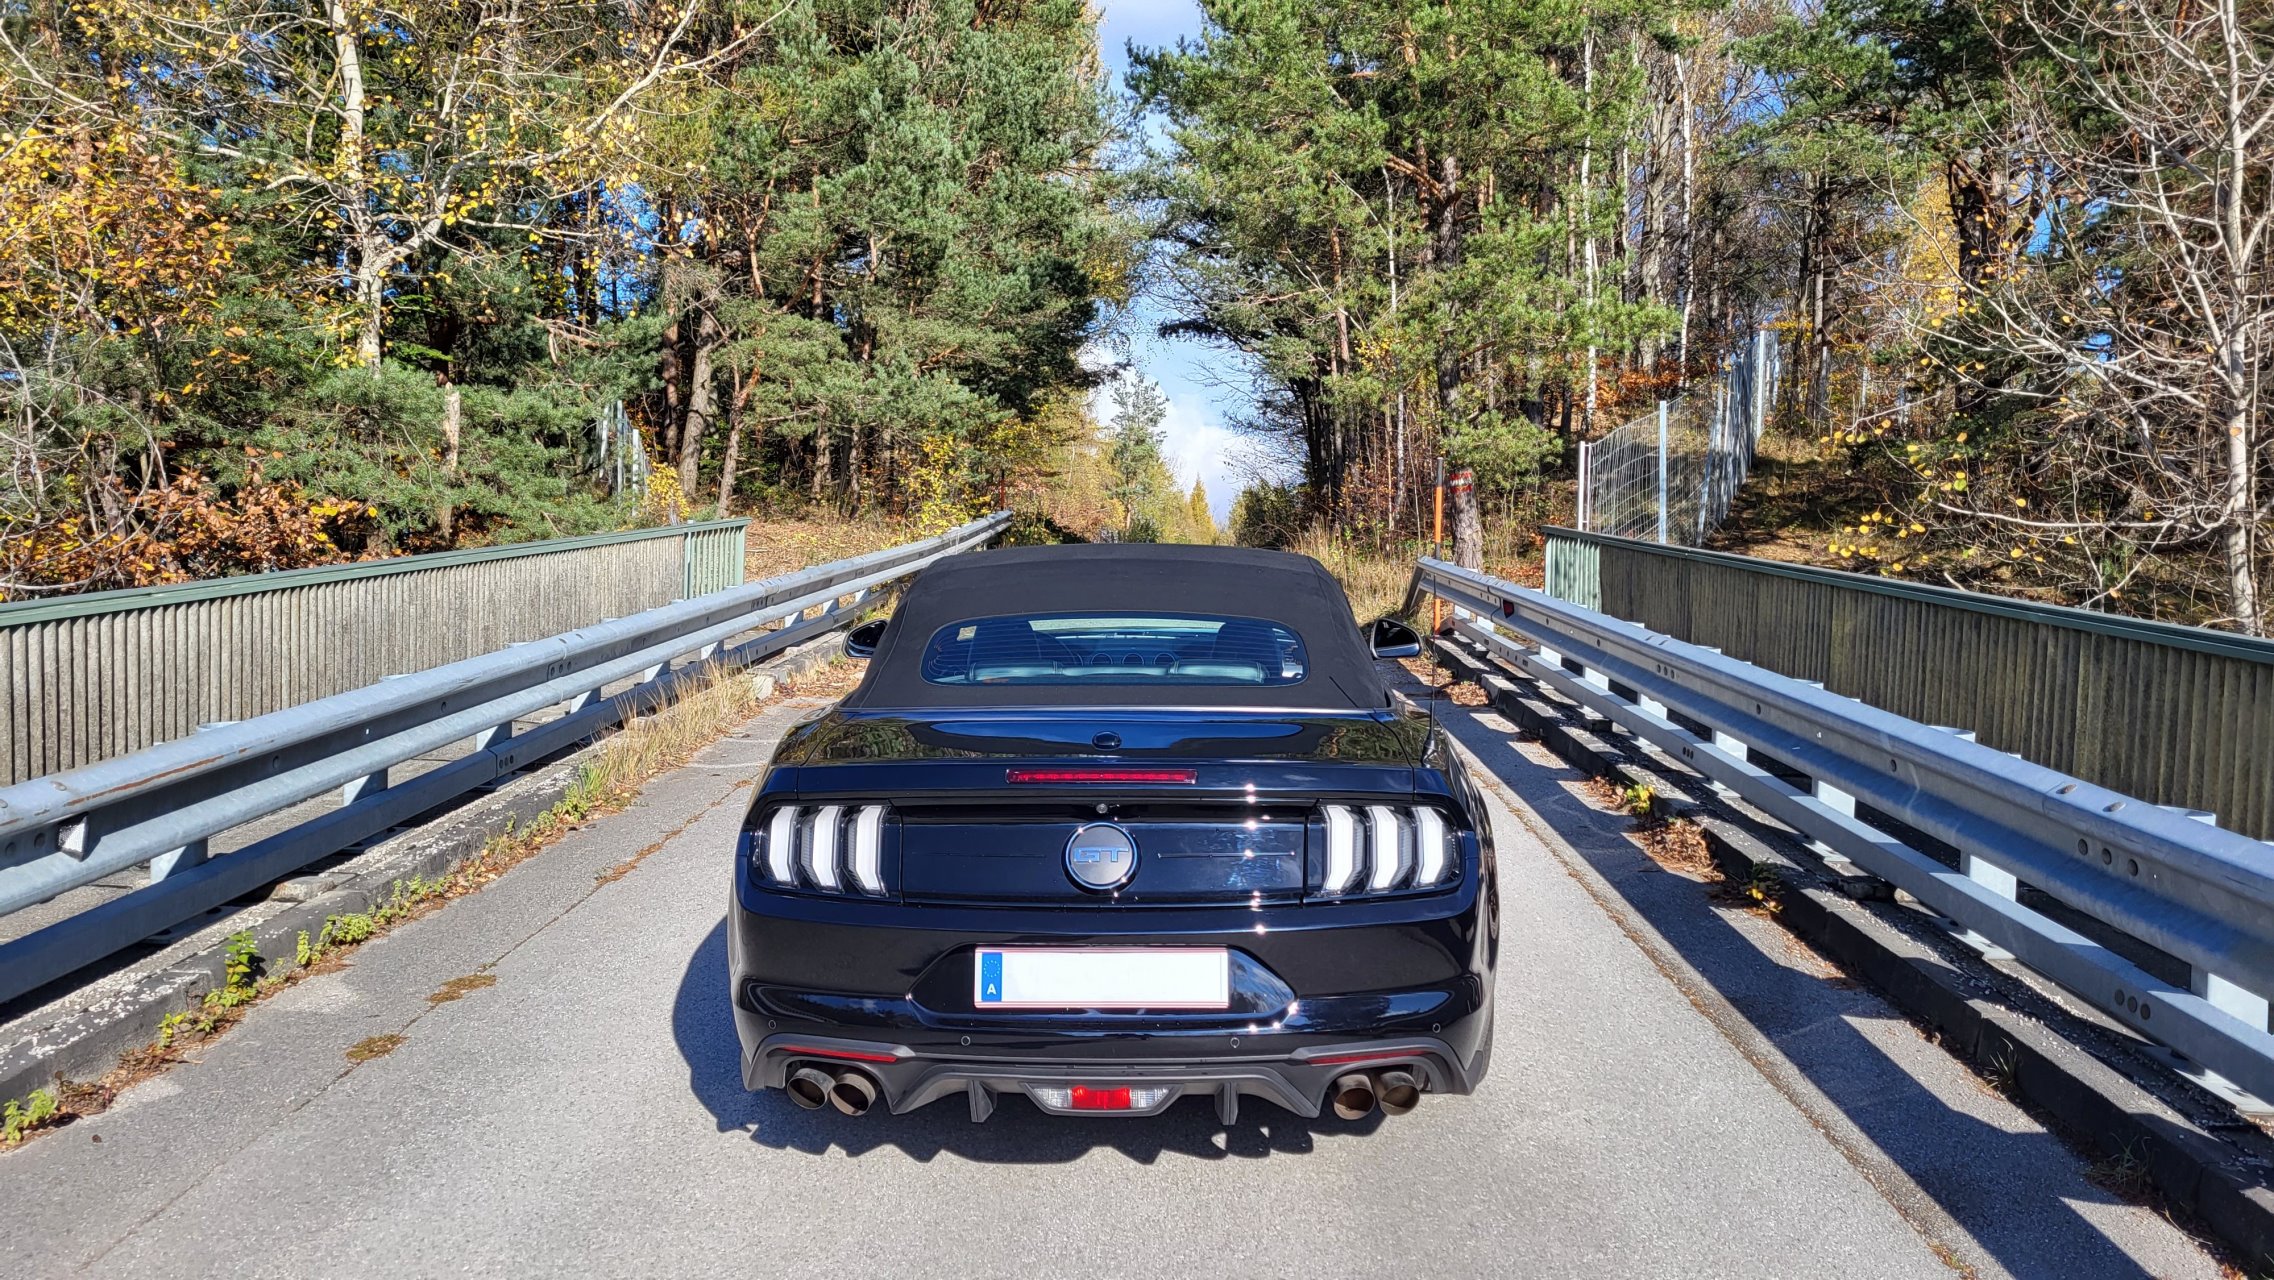 Ford Mustang GT 5.0 Cabrio in Österreich bei rent-full-power mieten